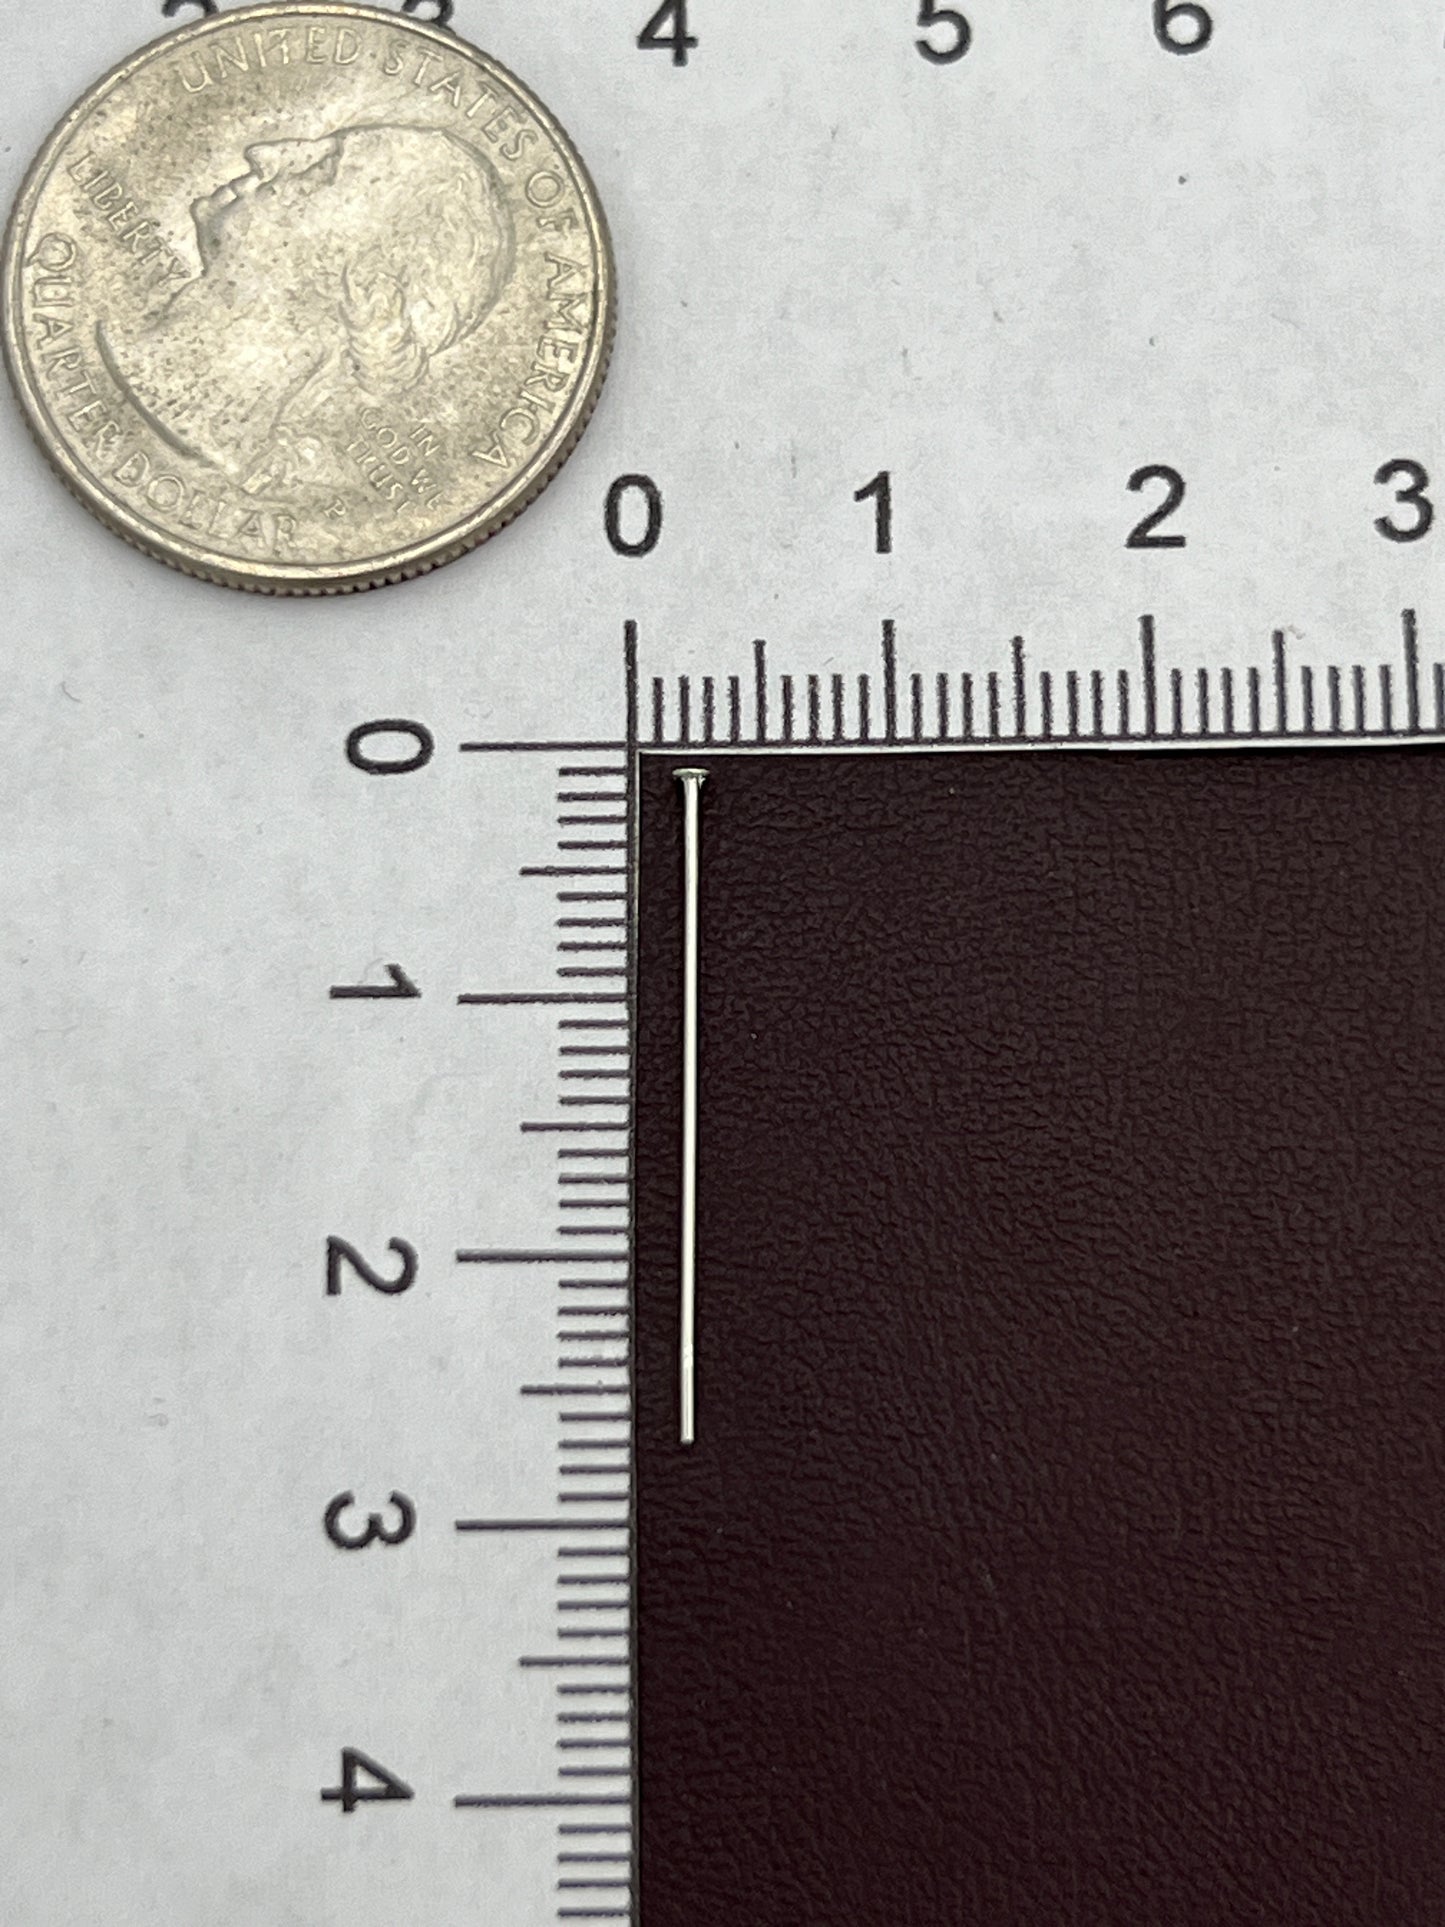 Headpin White Metal 1 Inch (Very thin) 1 Oz